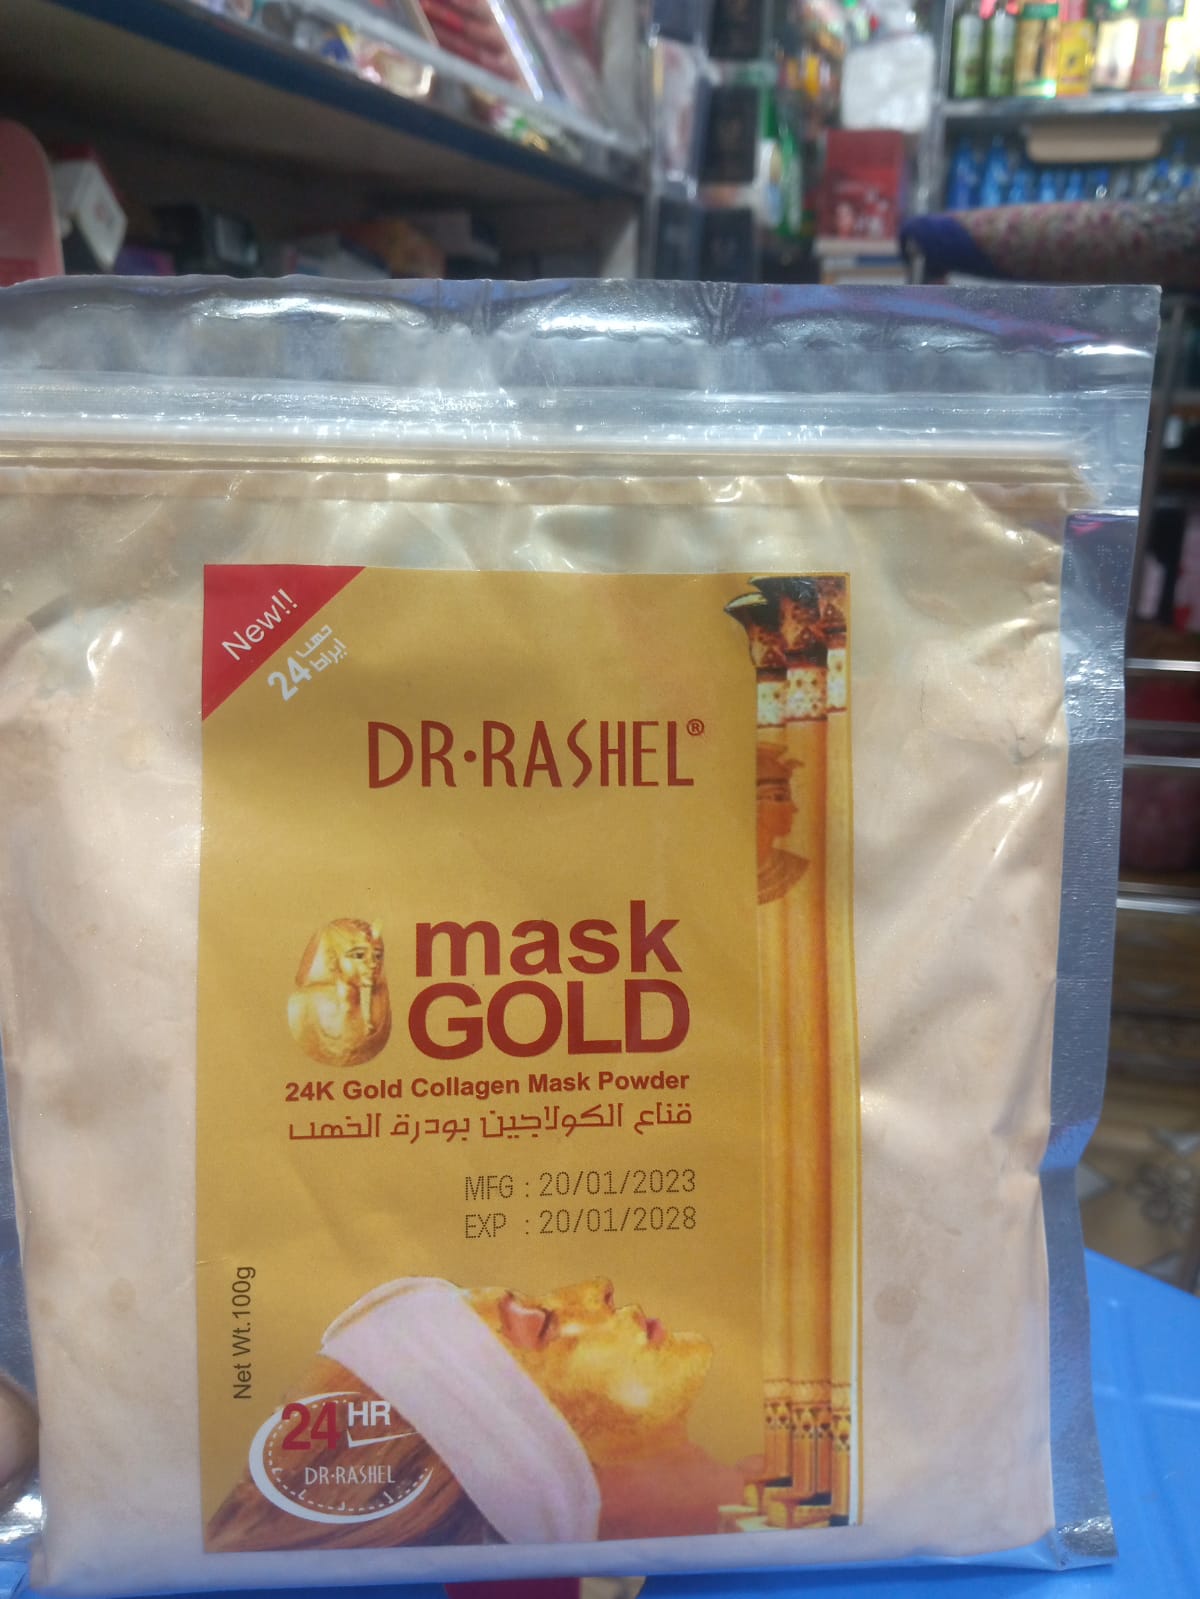 DR.RASHEL 24K GOLD Face Mask Powder Collagen 100g